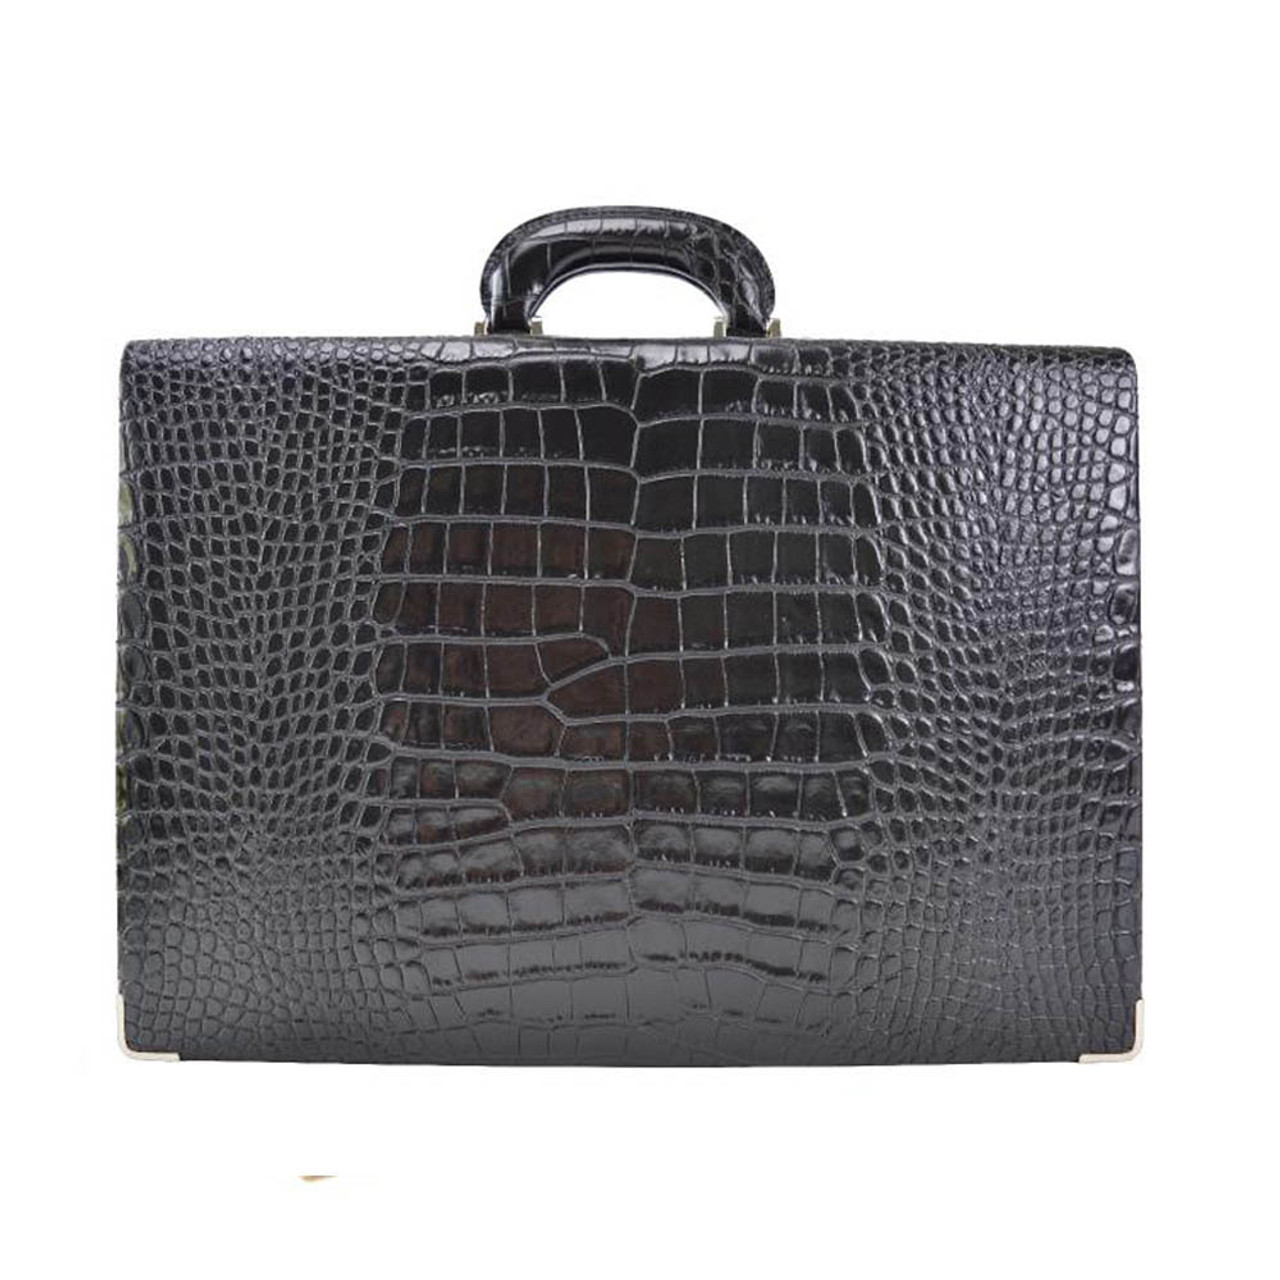 Handcrafted Original Crocodile Skin Leather Bags, Women's Luxury Shouler Bag